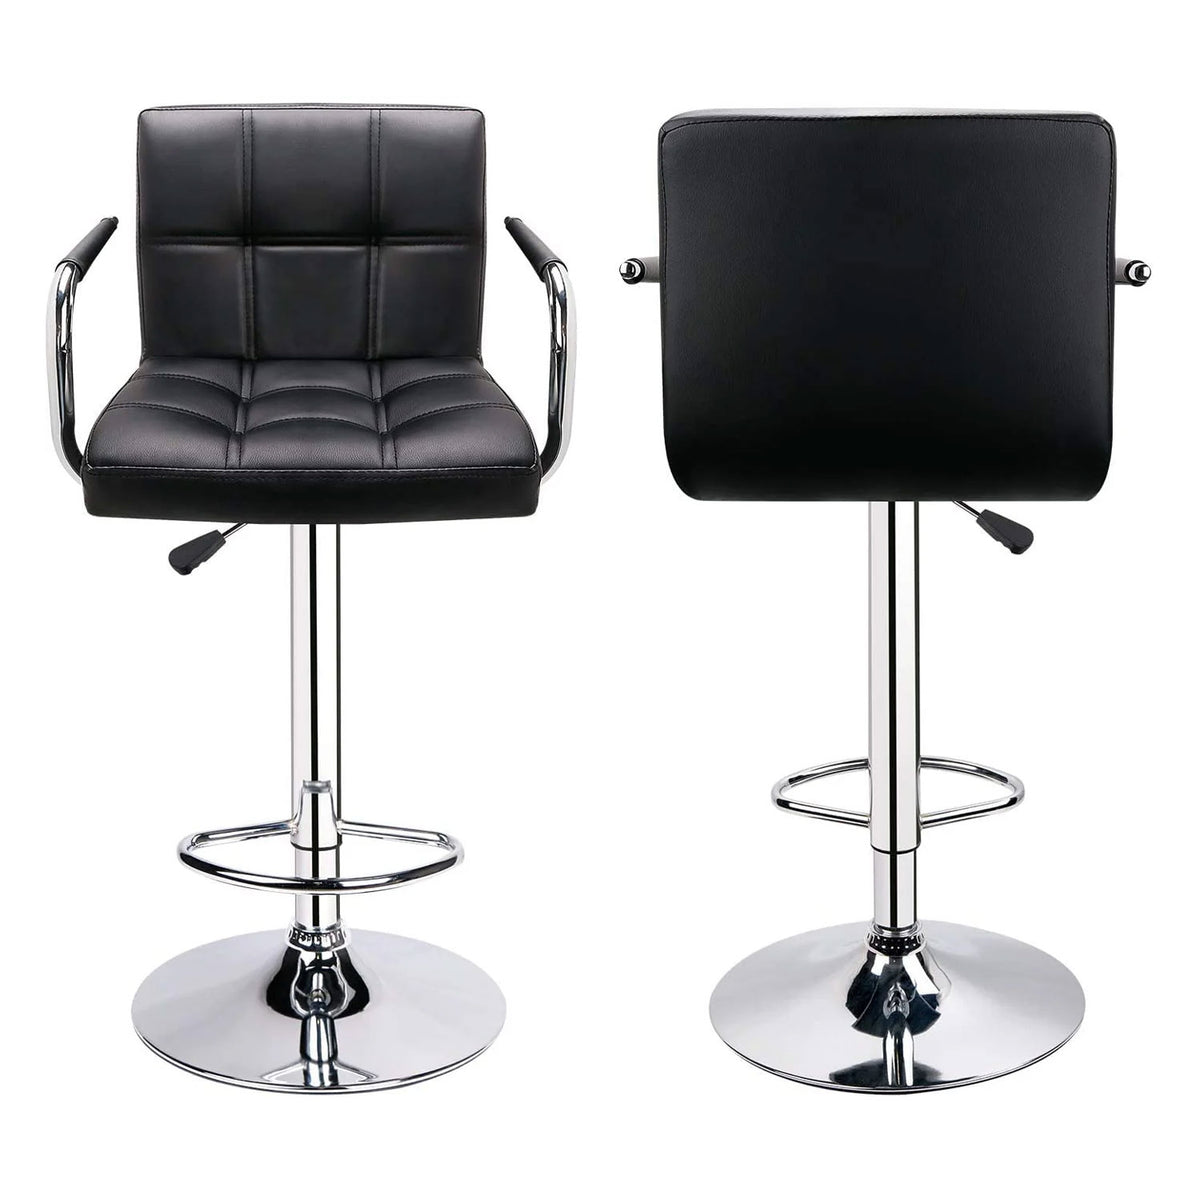 SmileSellers Revolving Swivel Bar Stool Chair| Revolving | Height Adjustable |Kitchen | Café |Store | Leatherette Bar Chair(Black)